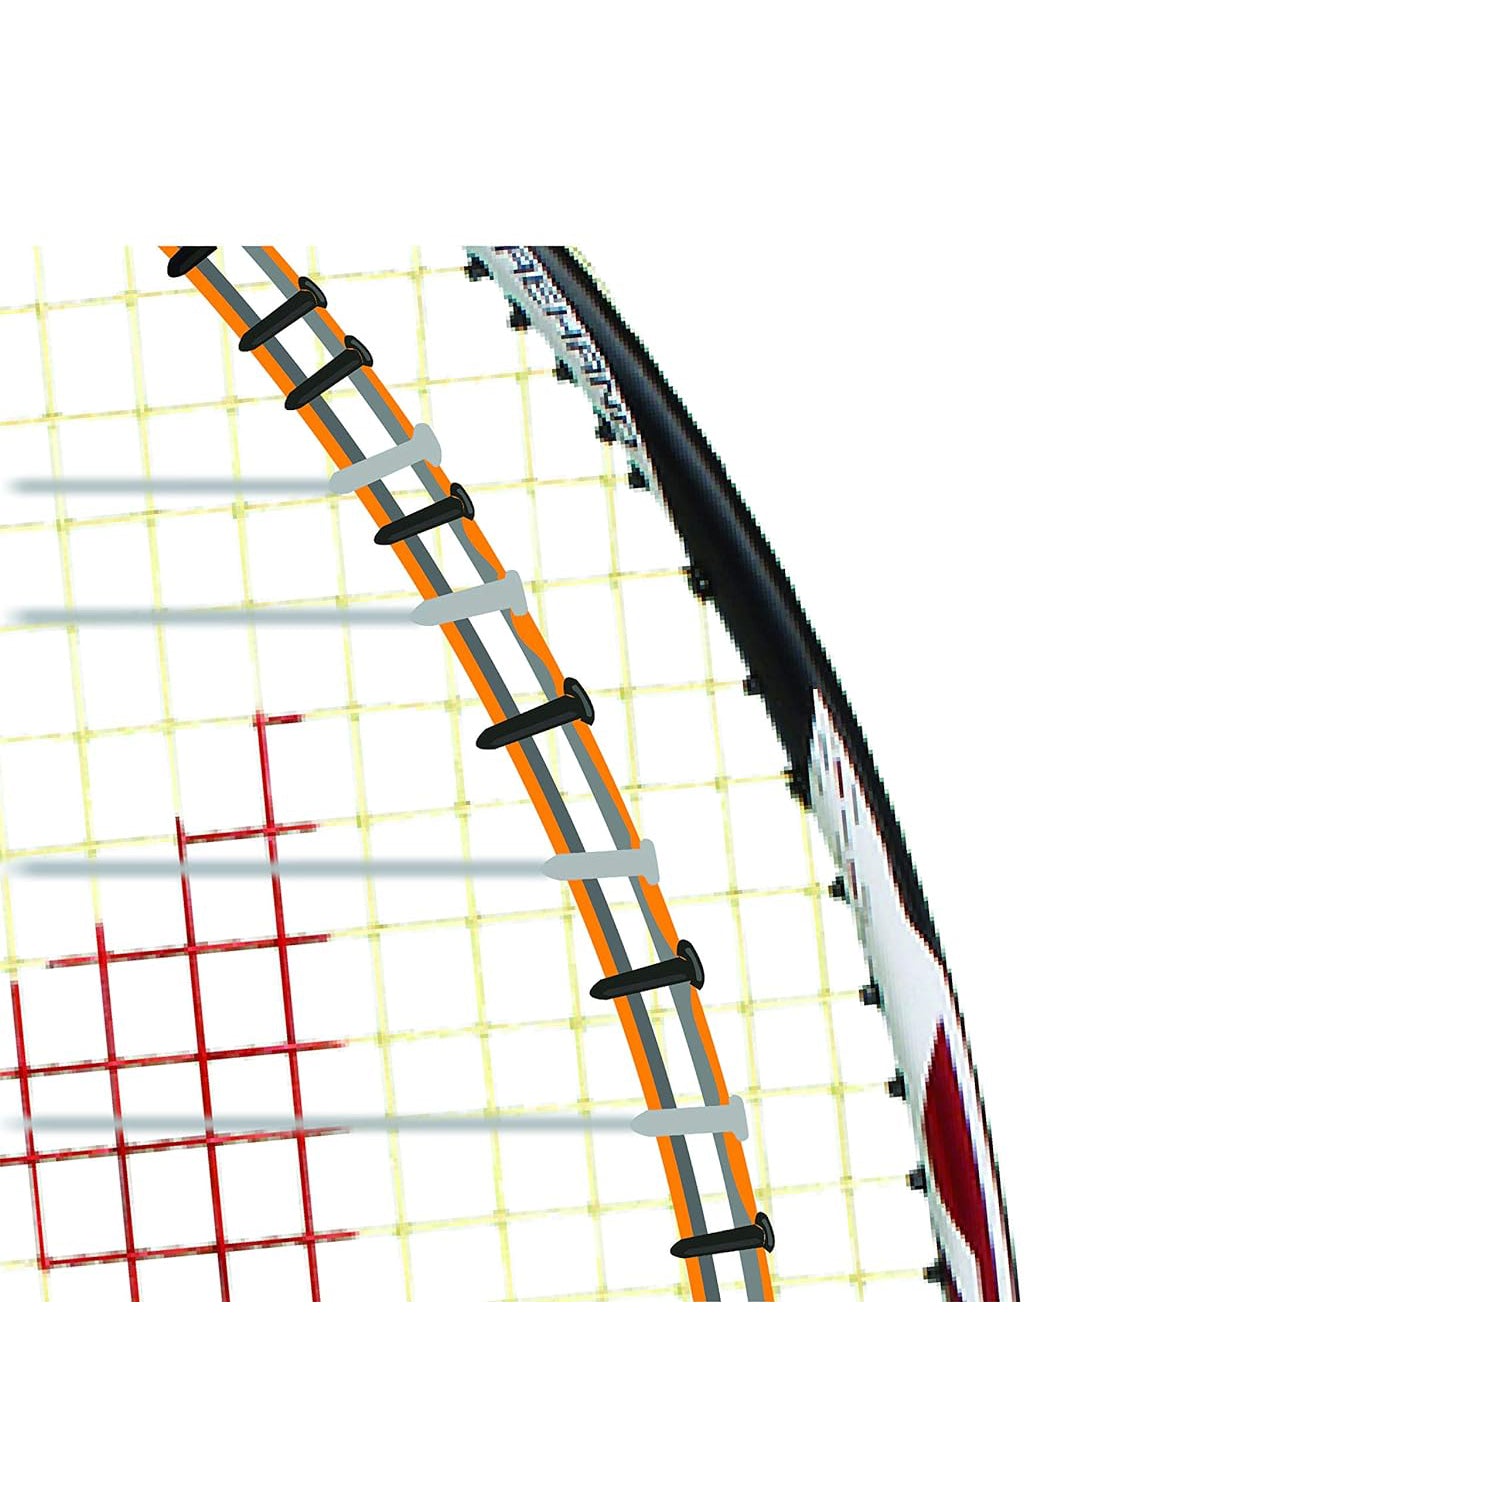 Yonex Duora Z Strike Unstrung Badminton Racquet, Black/White - Best Price online Prokicksports.com